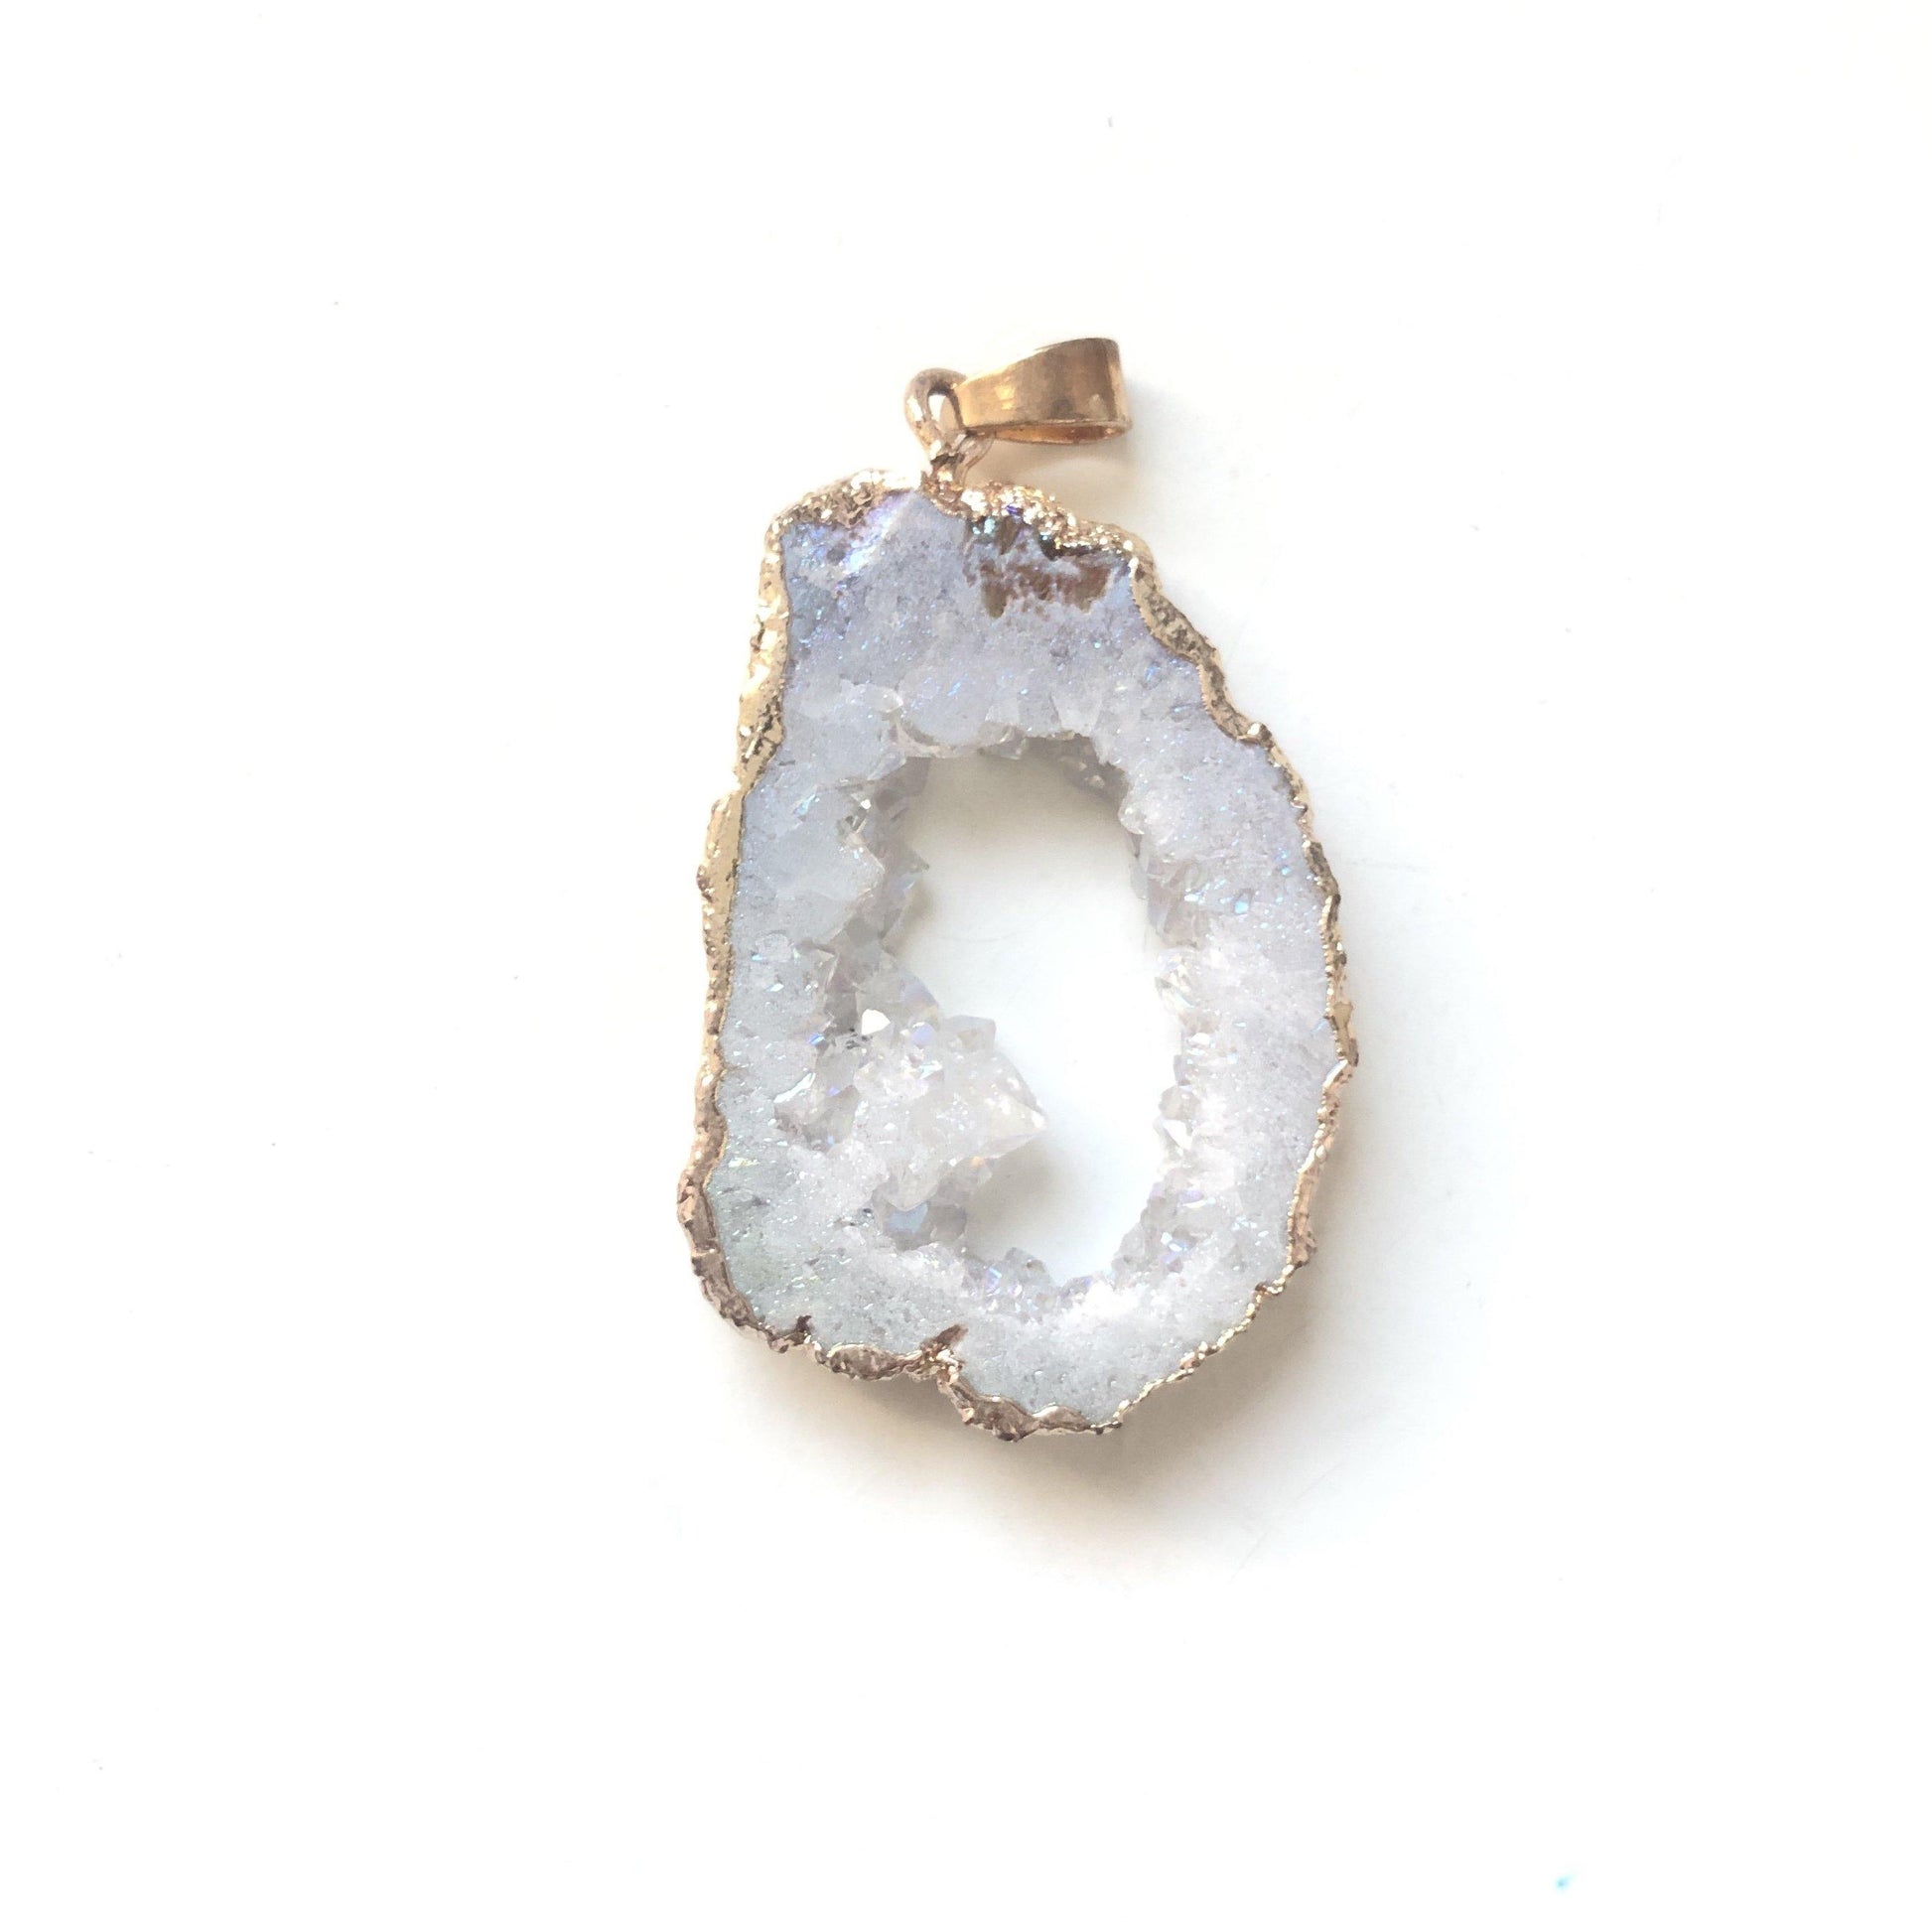 5pcs/lot 30-50mm Natural Agate Druzy Charm White Stone Charms Charms Beads Beyond